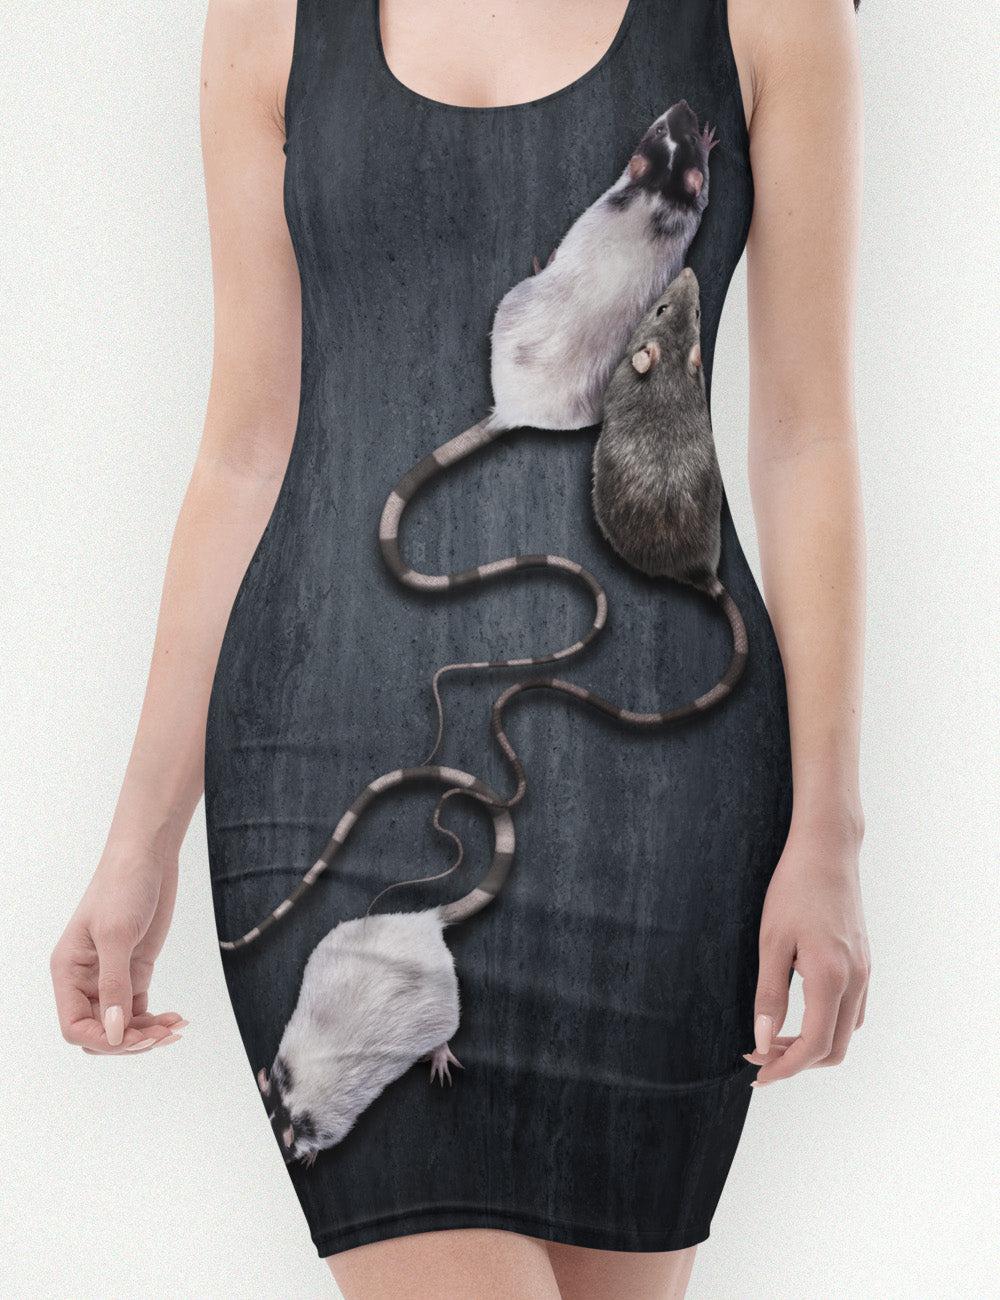 The Rat Dress